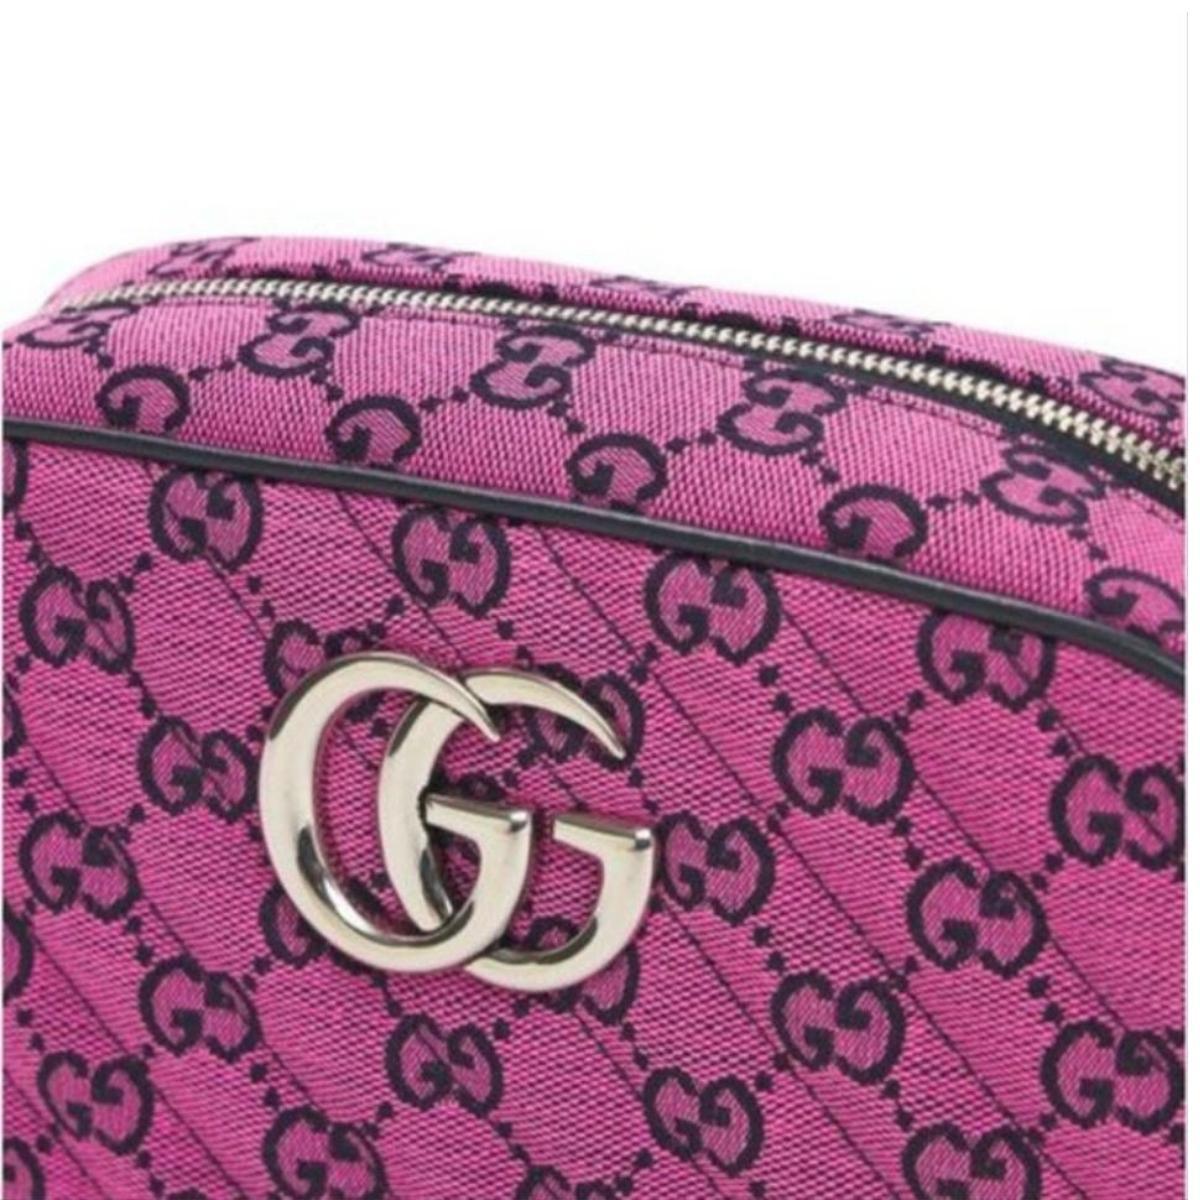 pink gucci purse